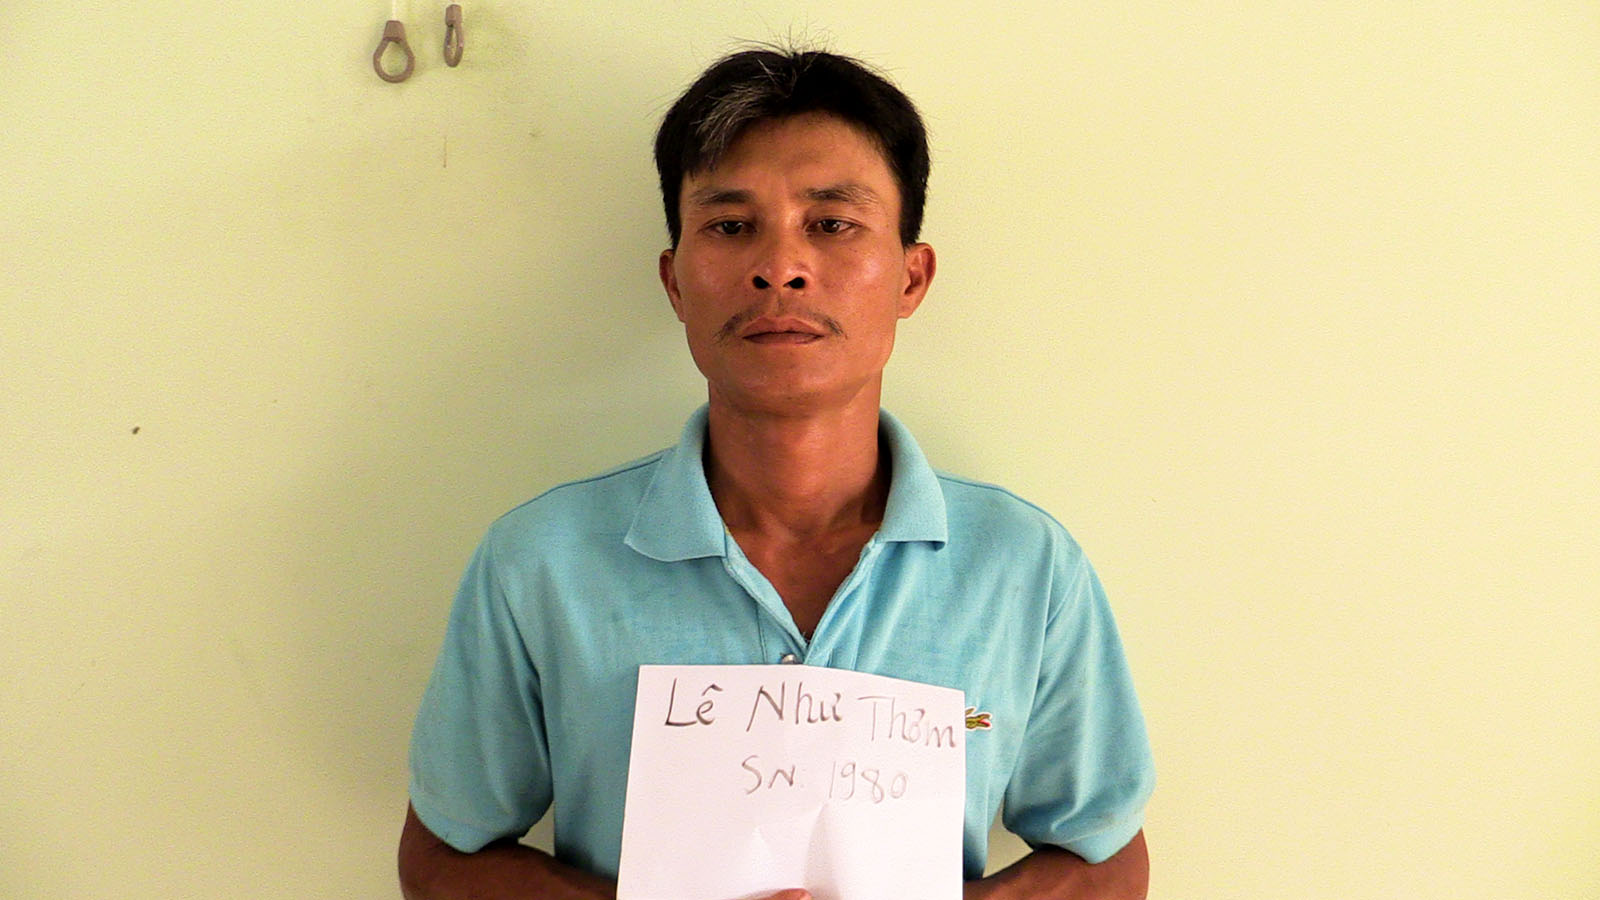 Murder suspect arrested after 15 years in hiding in Vietnam